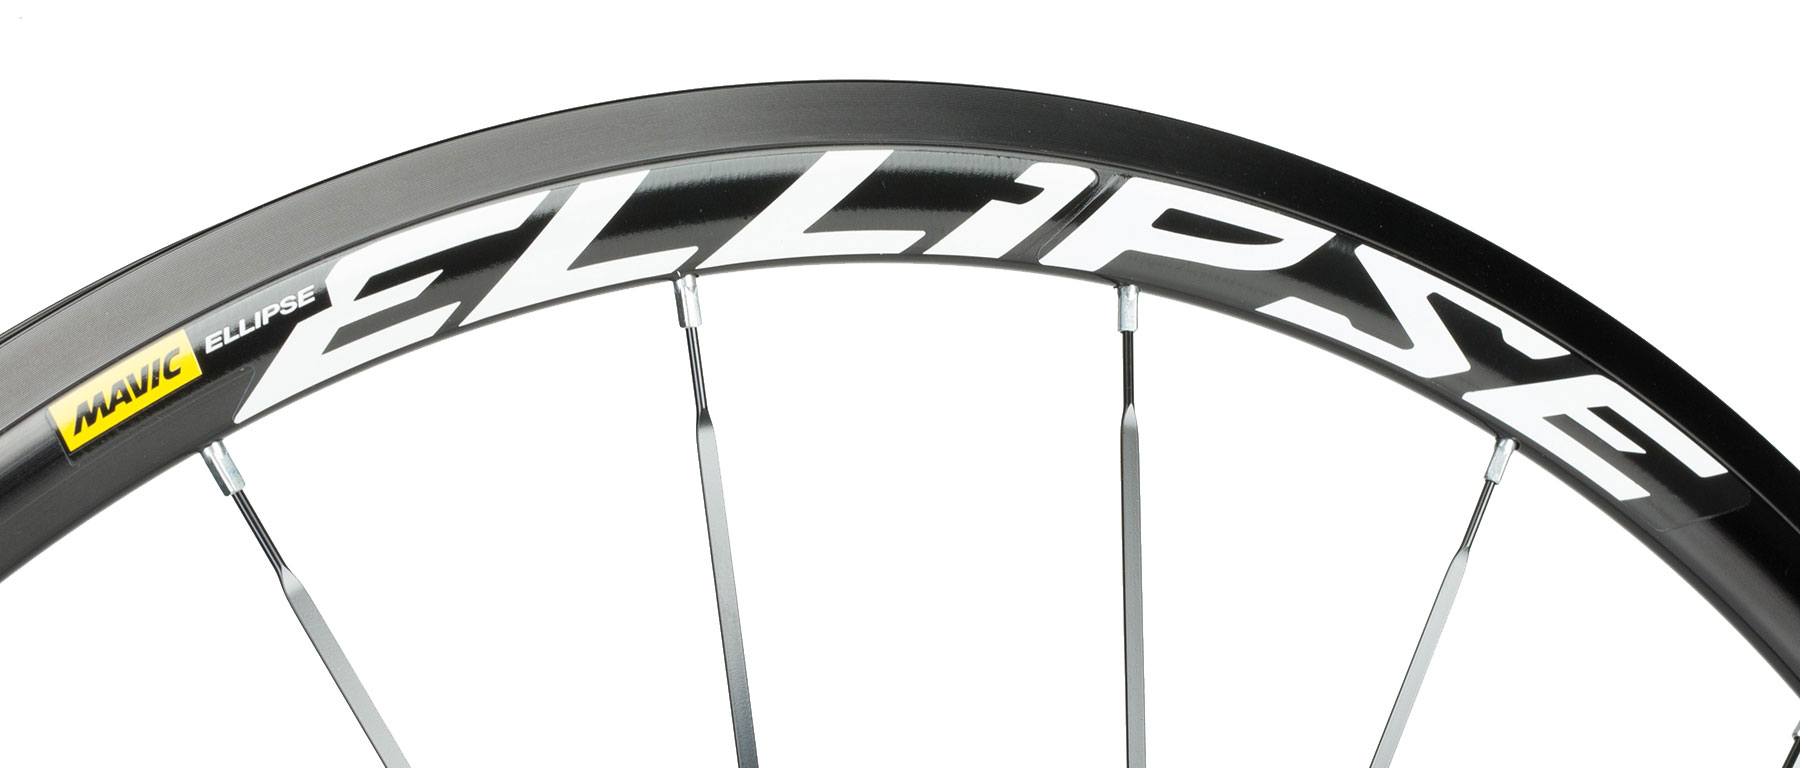 Mavic Ellipse Track Front Wheel Excel Sports | Shop Online From 